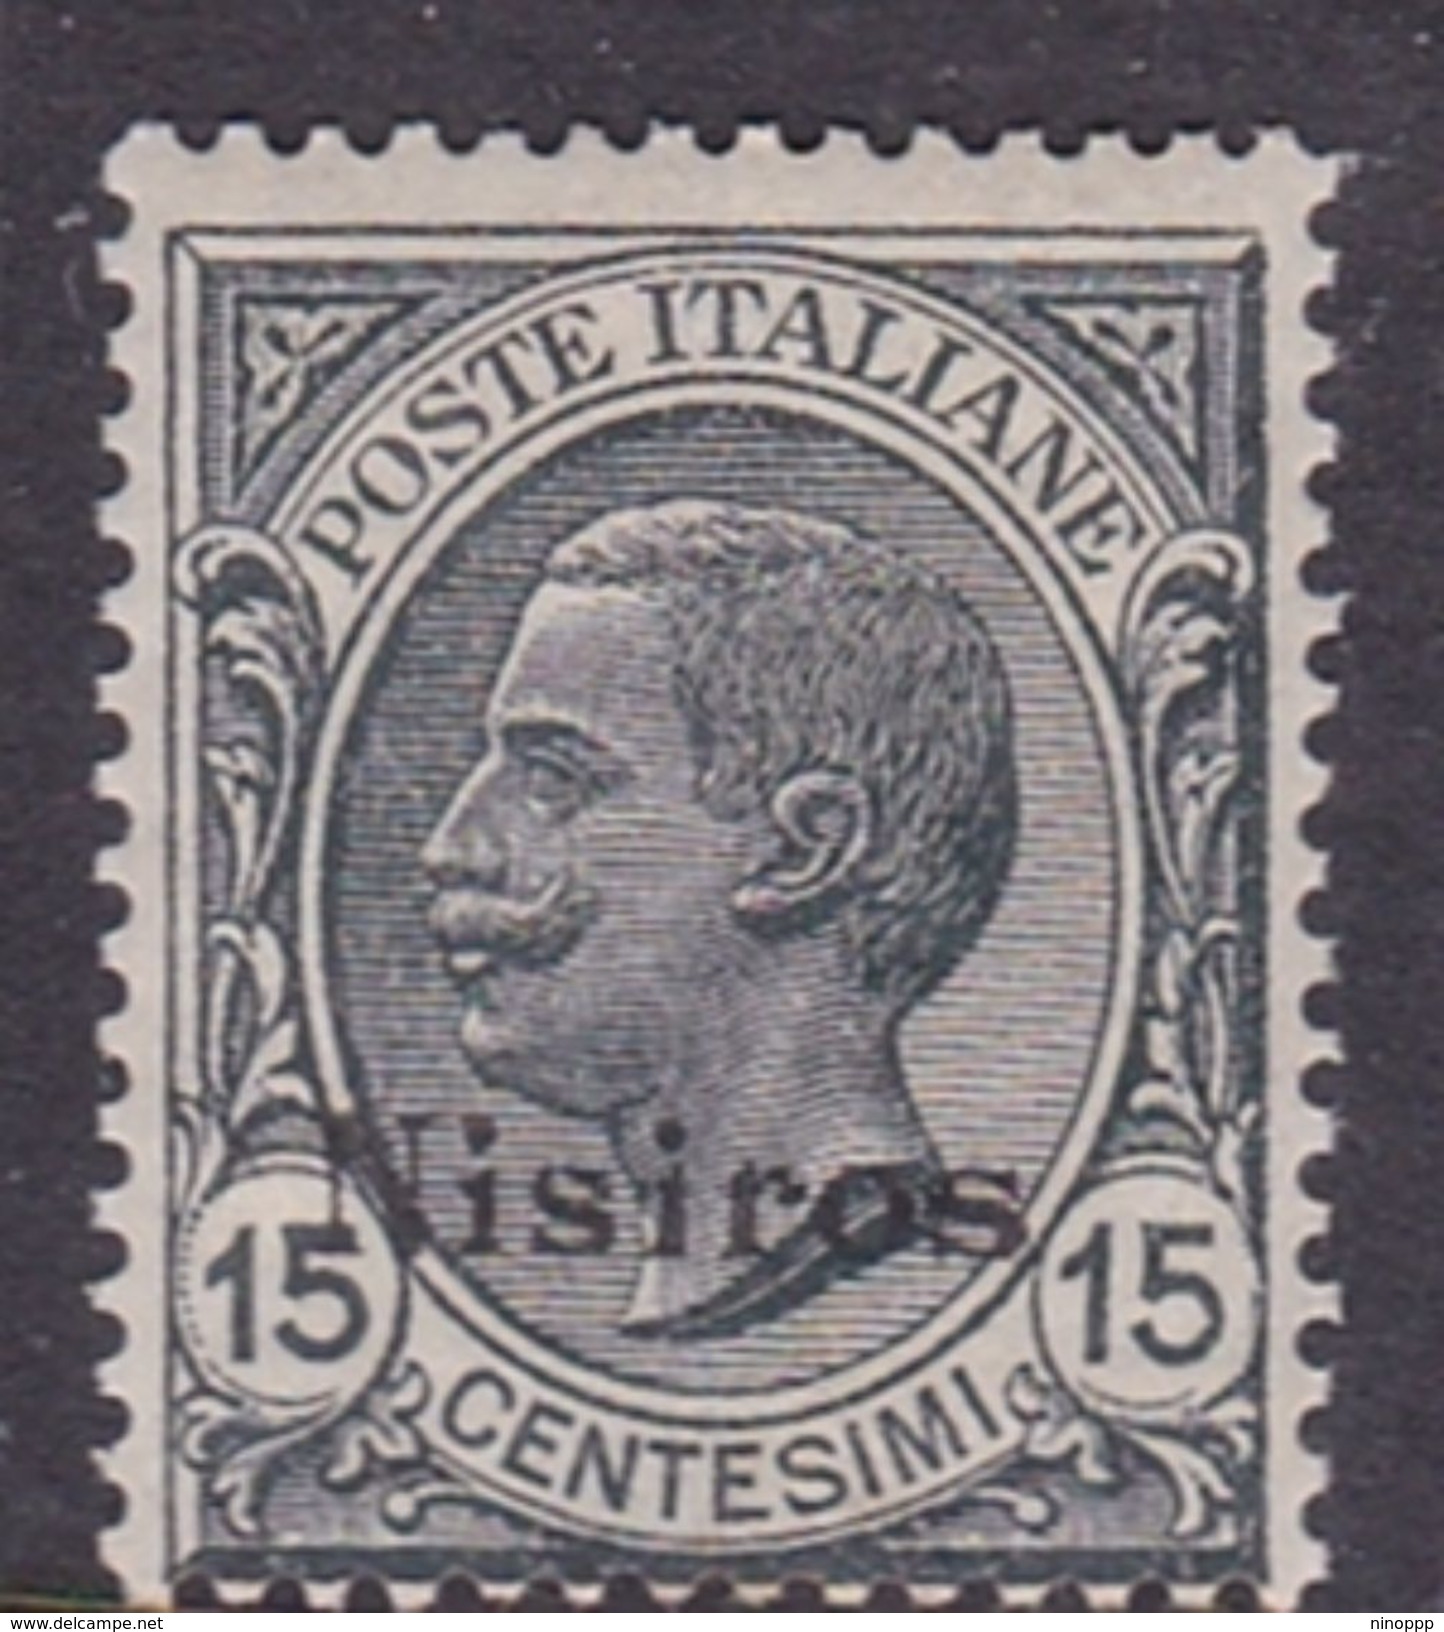 Italy-Colonies And Territories-Aegean-Nisiro S 10  1921 15c Slate MH - Aegean (Nisiro)